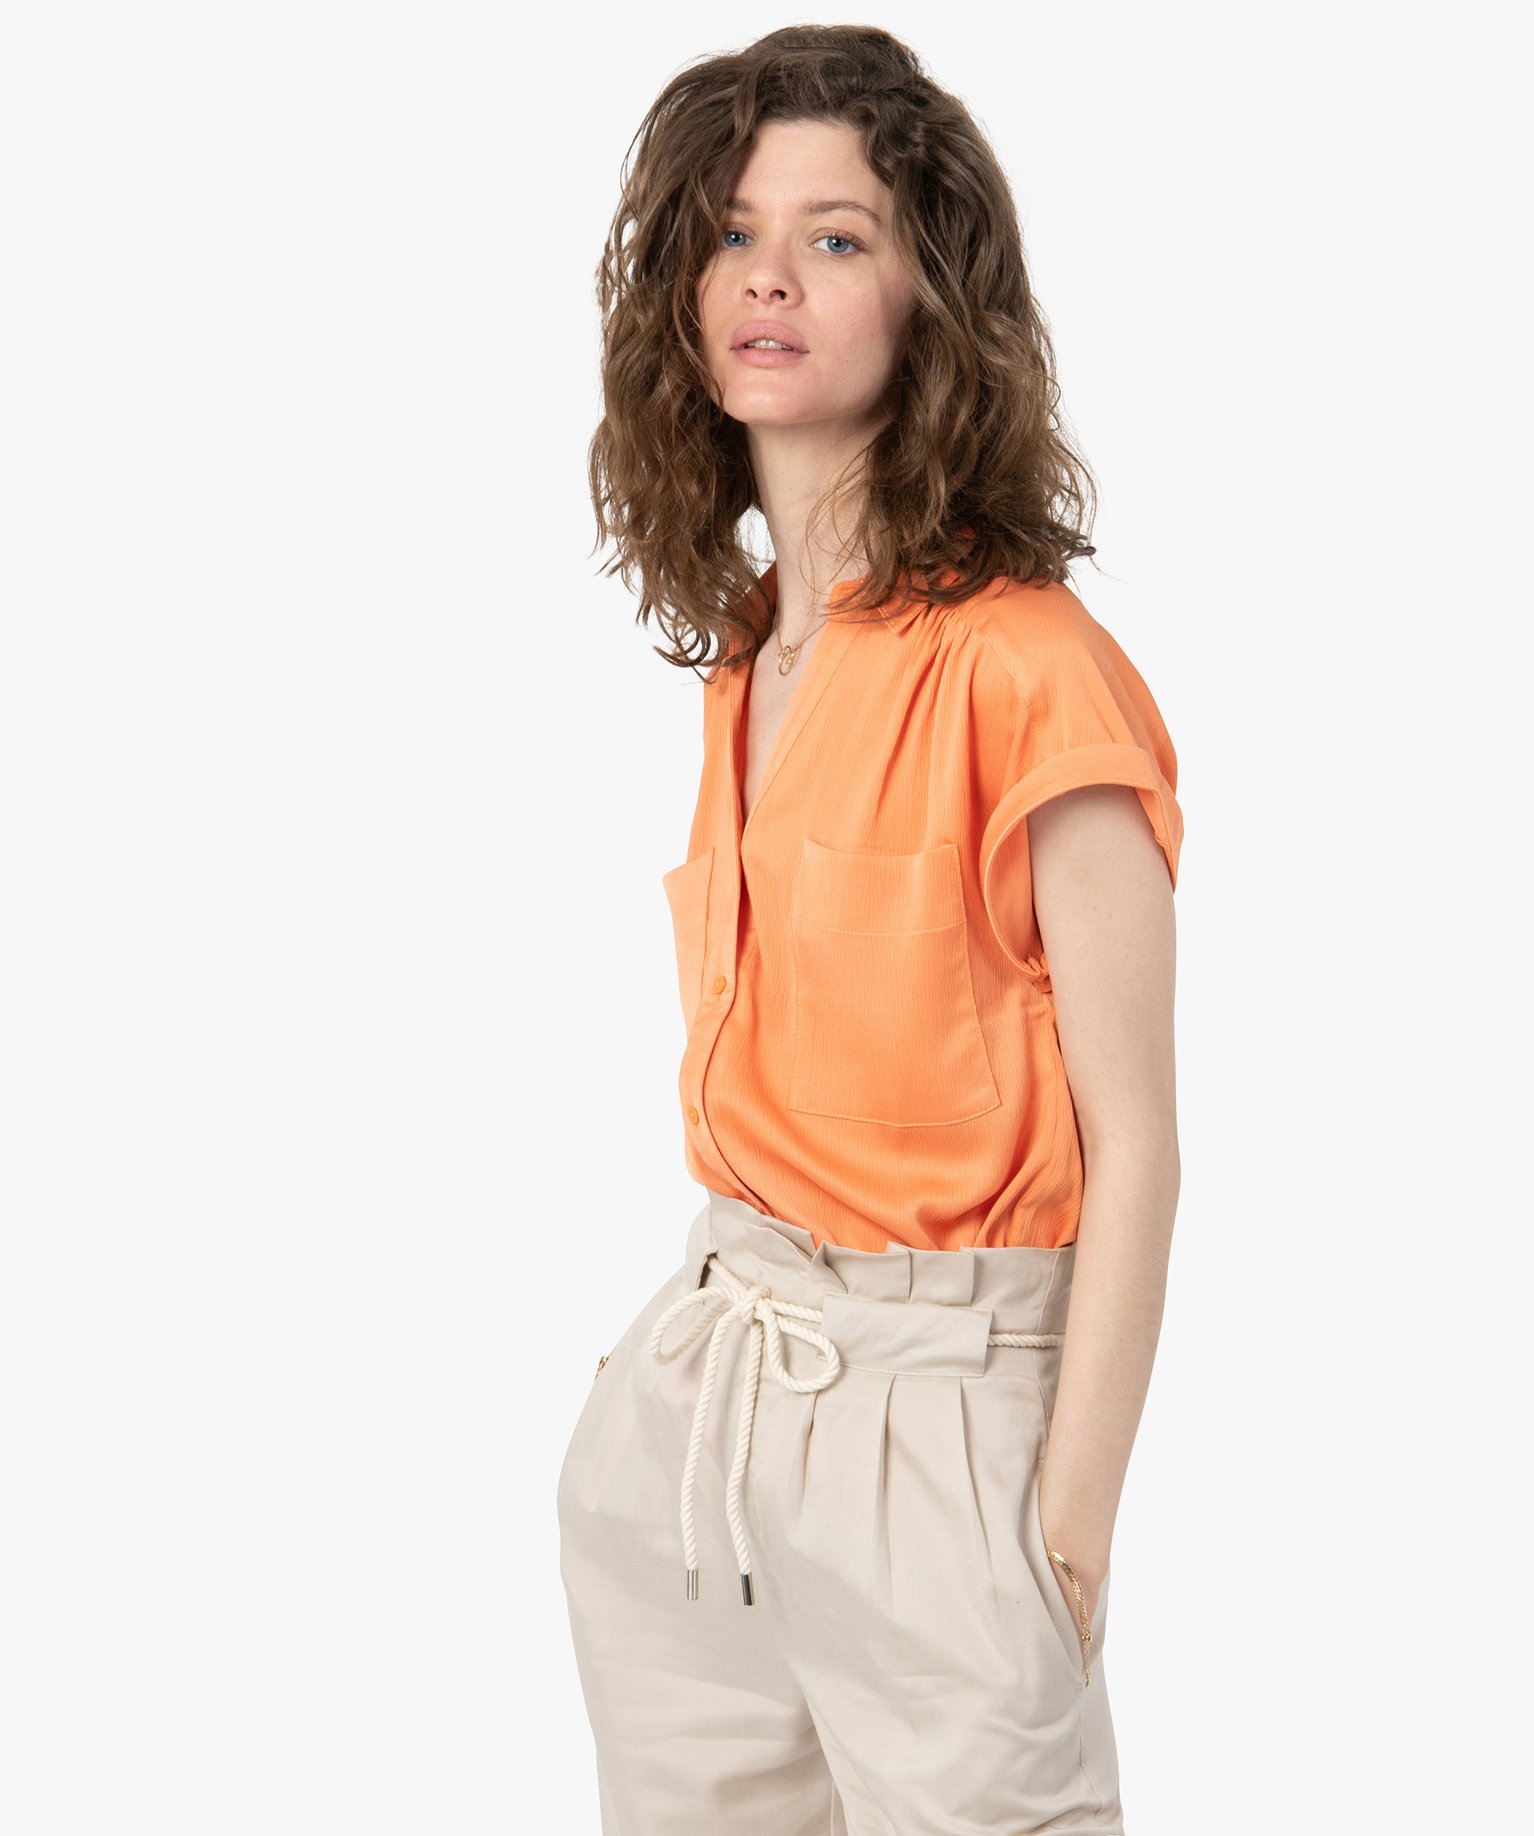 chemise femme a manches courtes en matiere satinee orange chemisiers